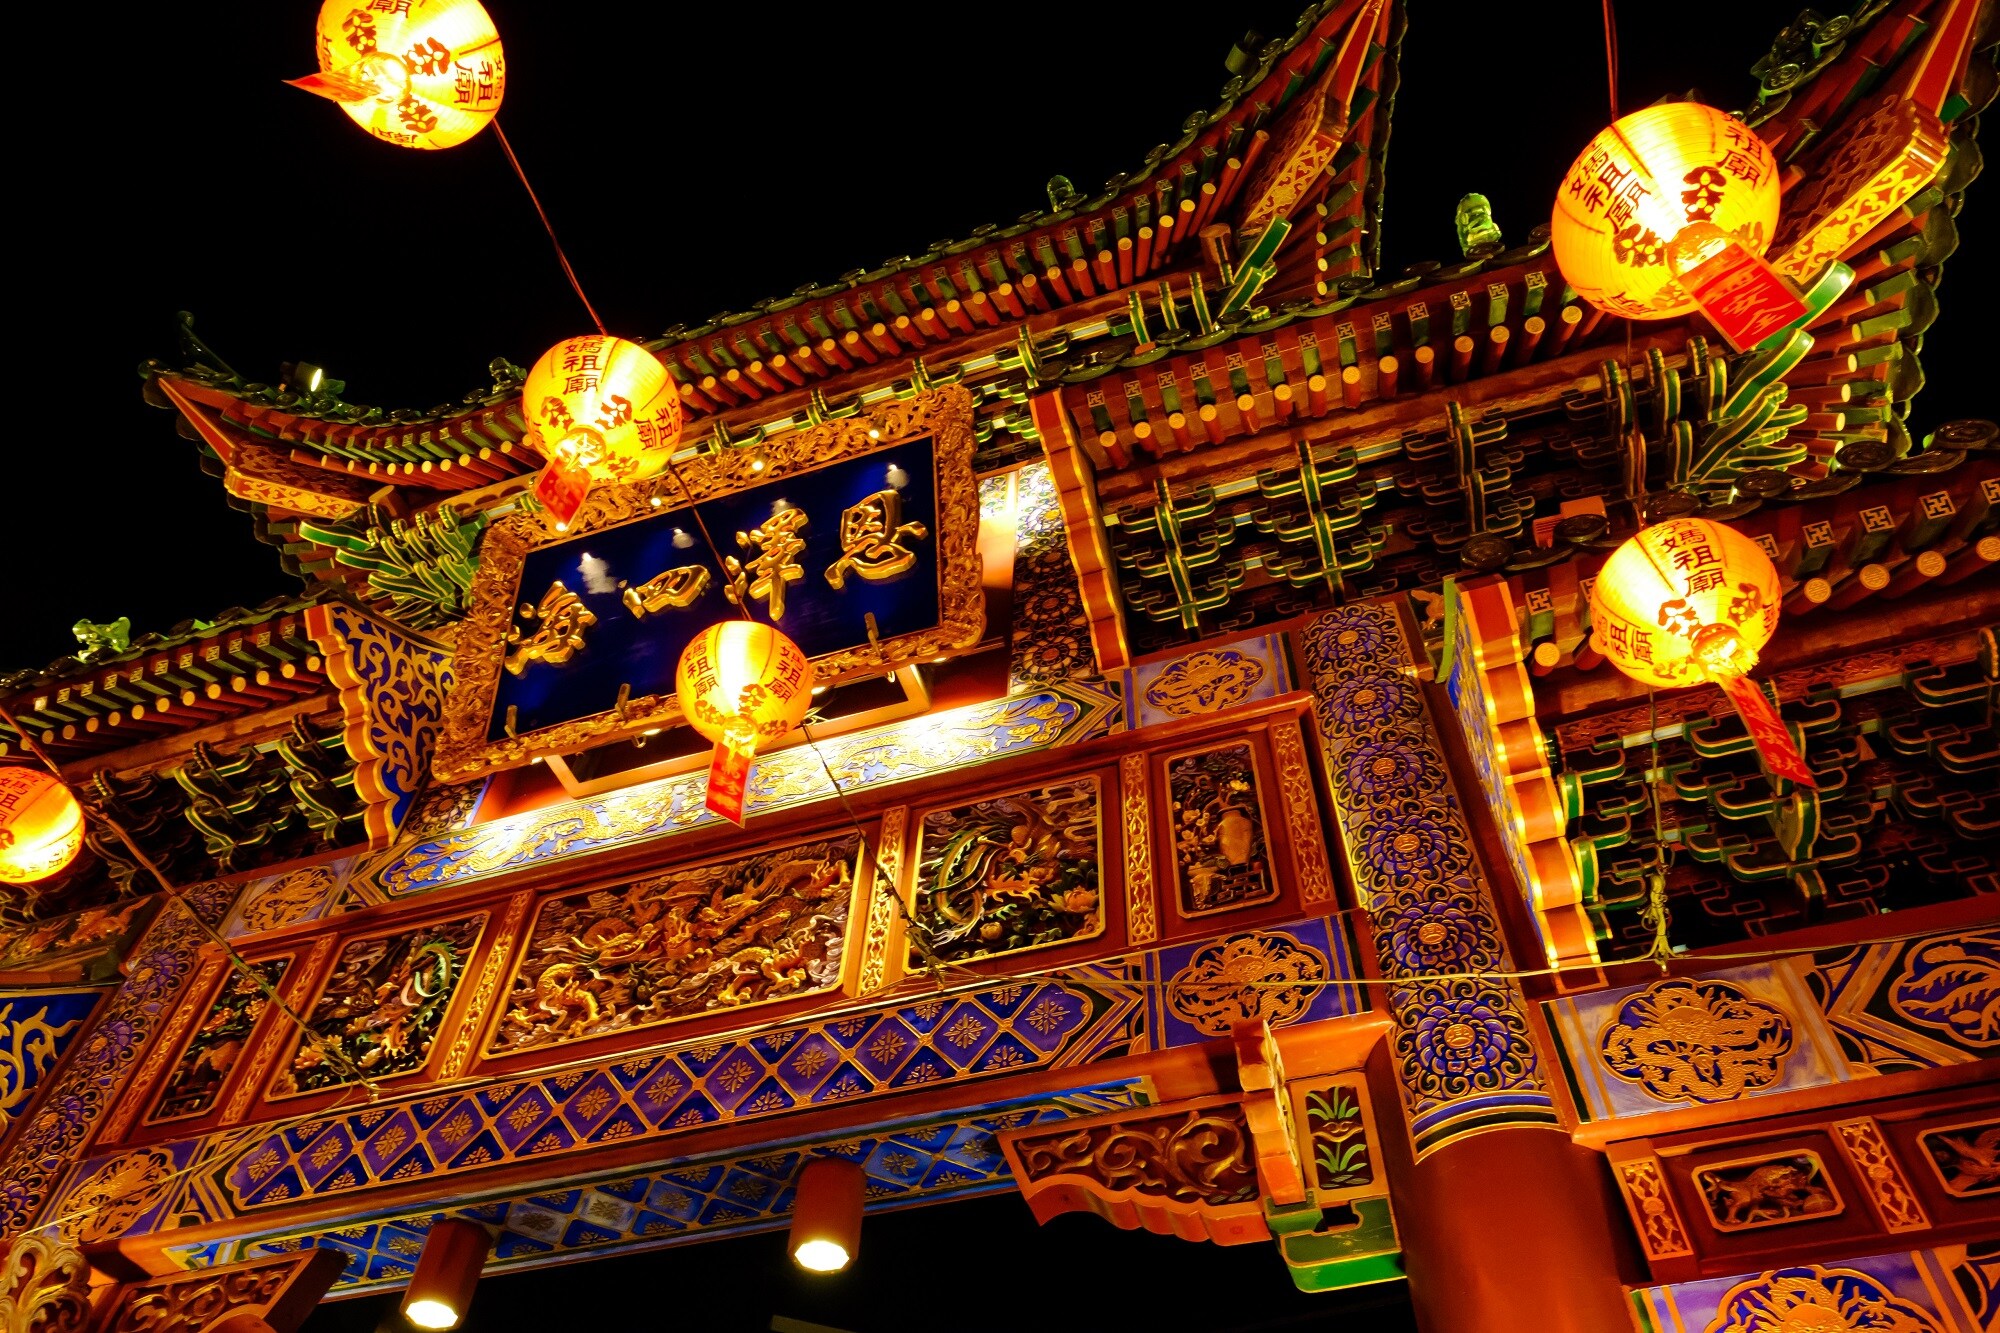 Yokohama Night Building Lamp Lighting Place Of Worship China Town 1392802 Pxhere.com